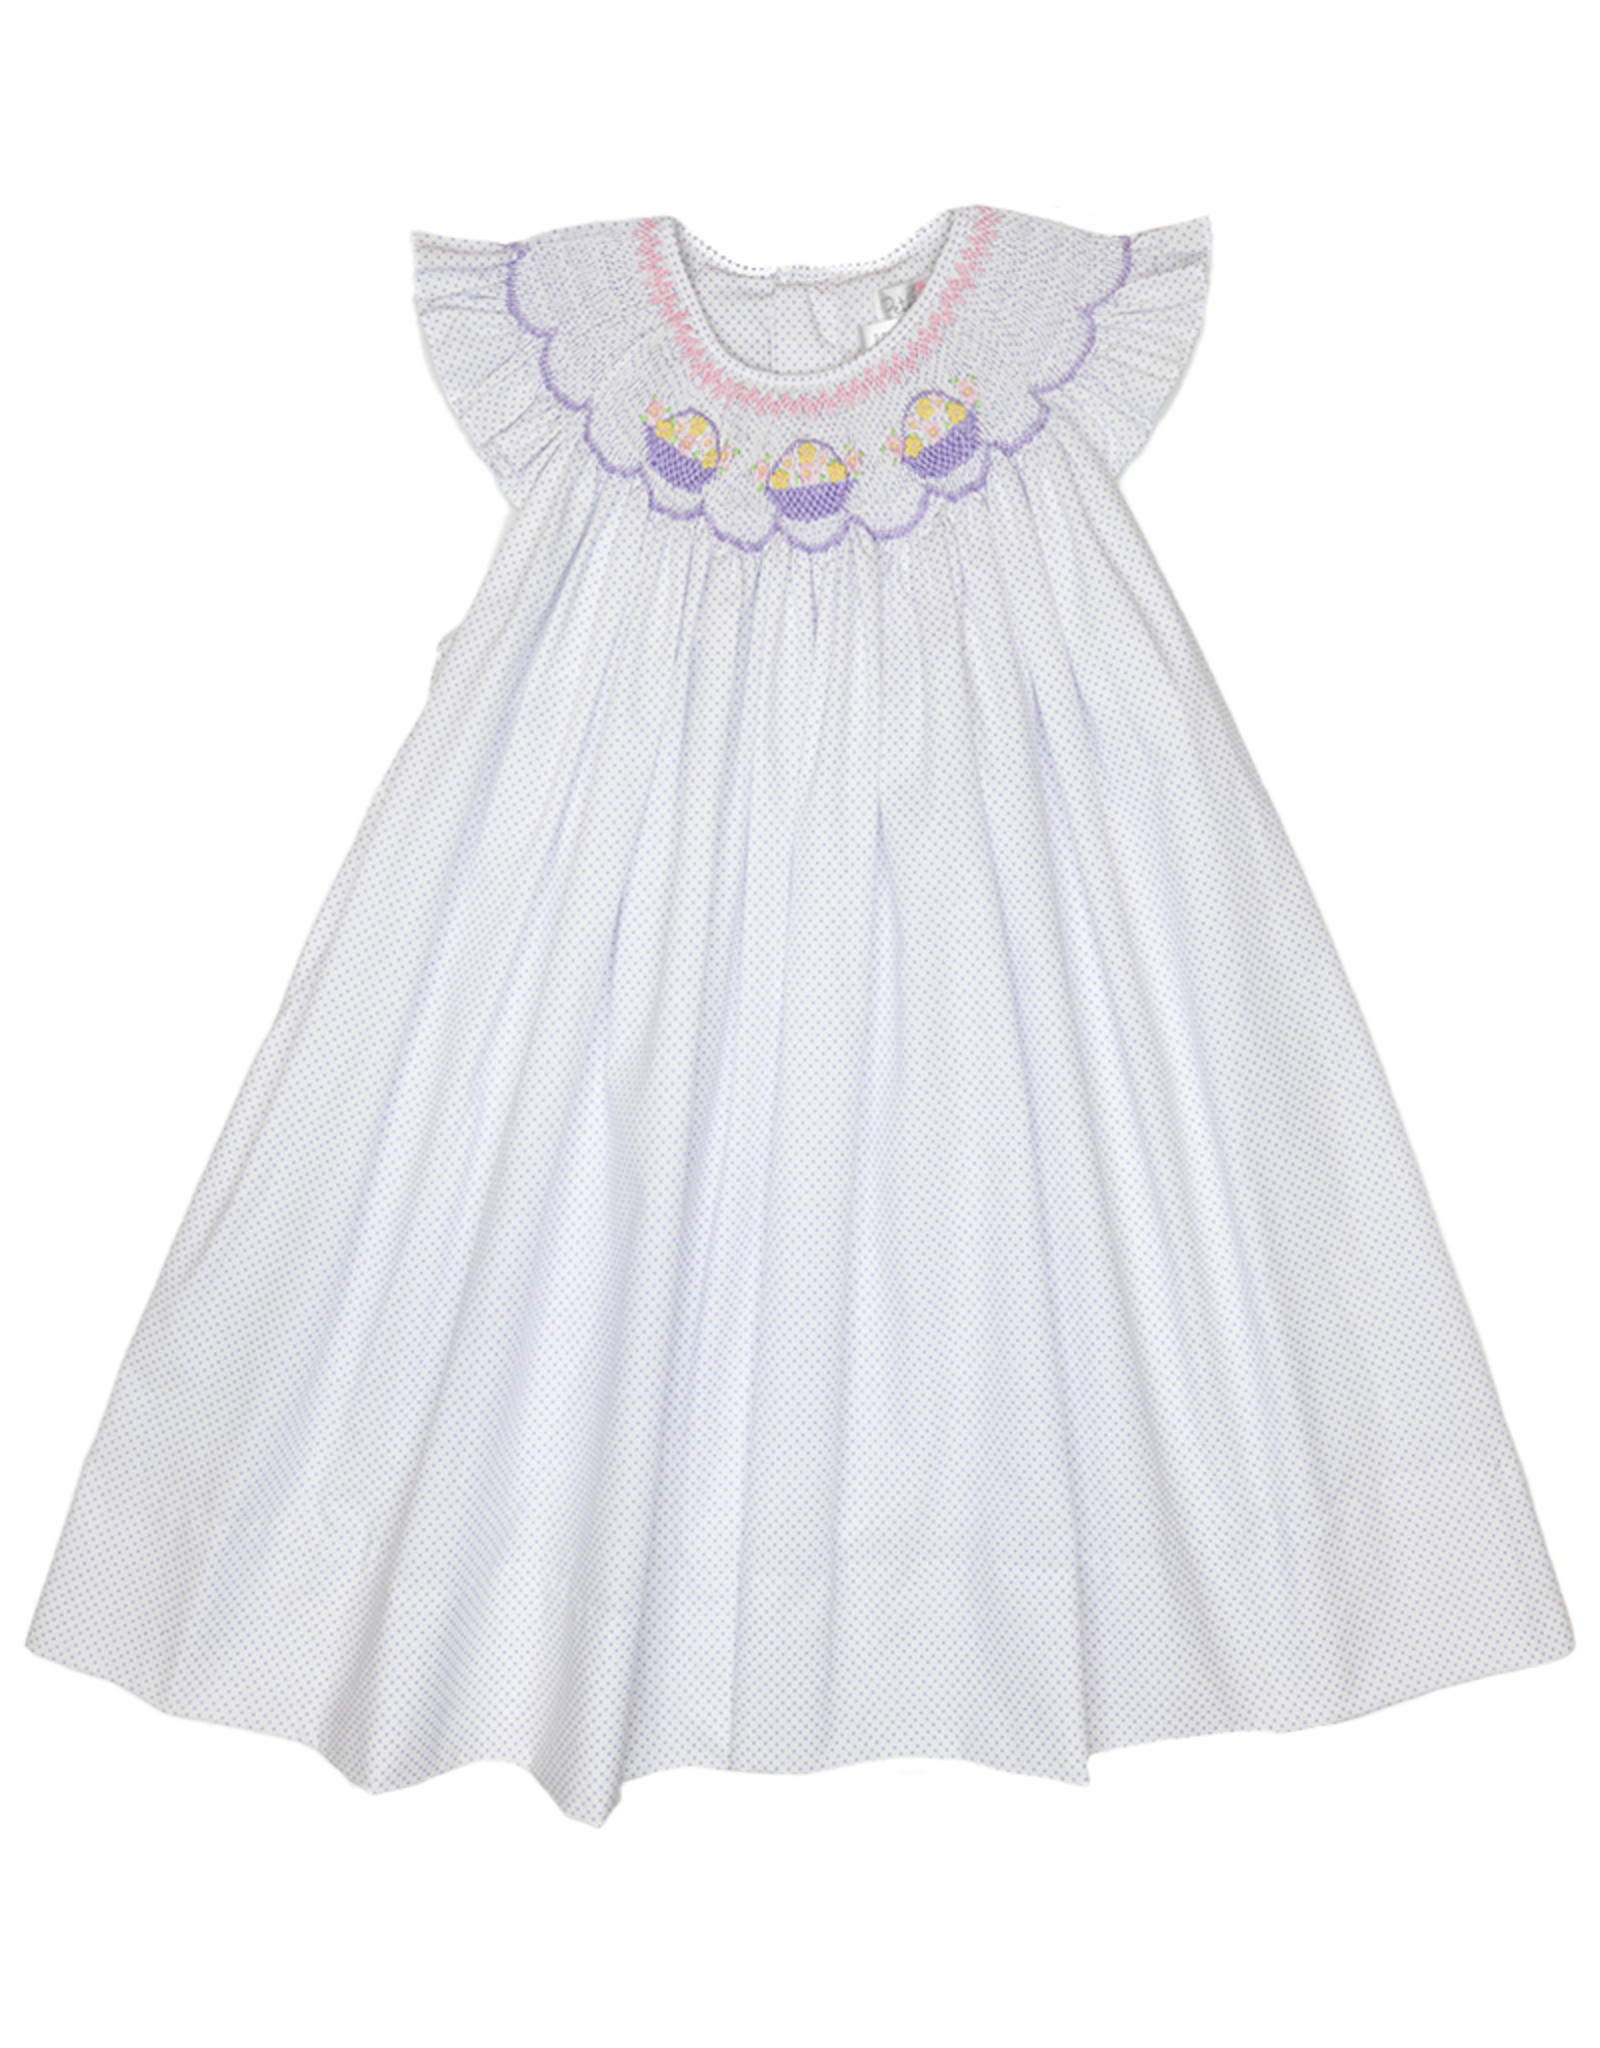 Petit Ami 4146 Lavender Dot Smocked Dress